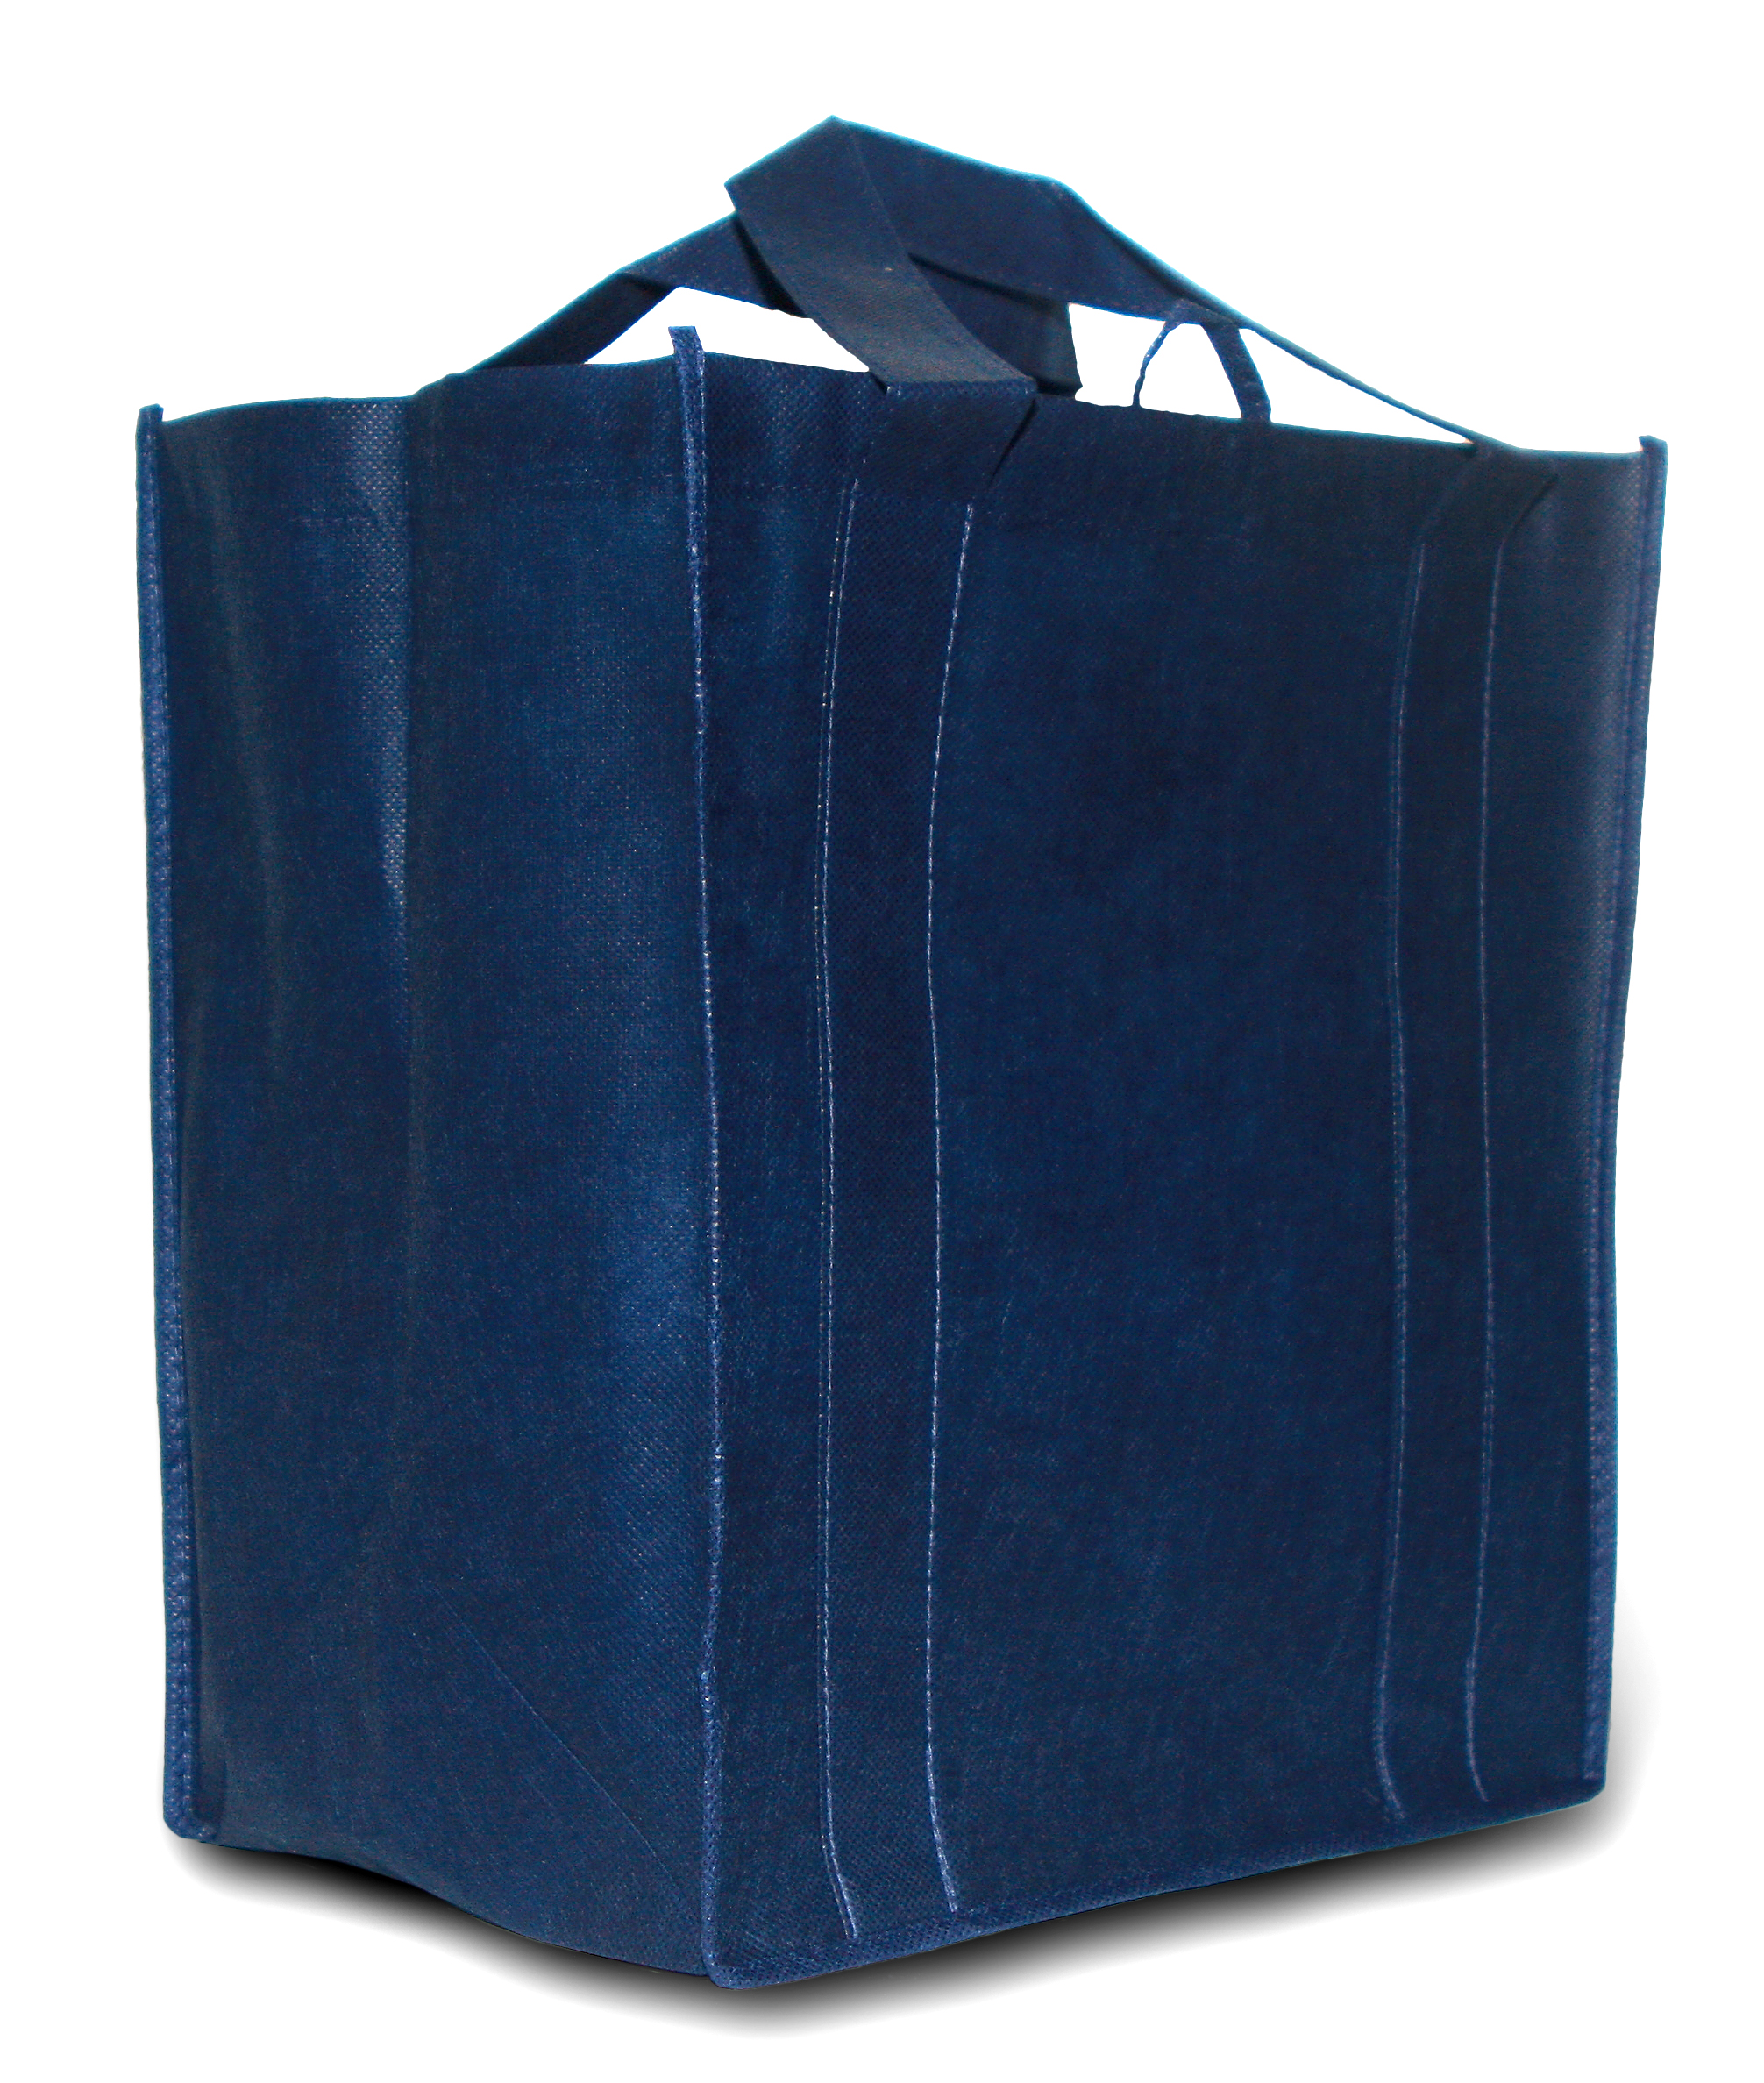 Reusable shopping bag - Wikiwand